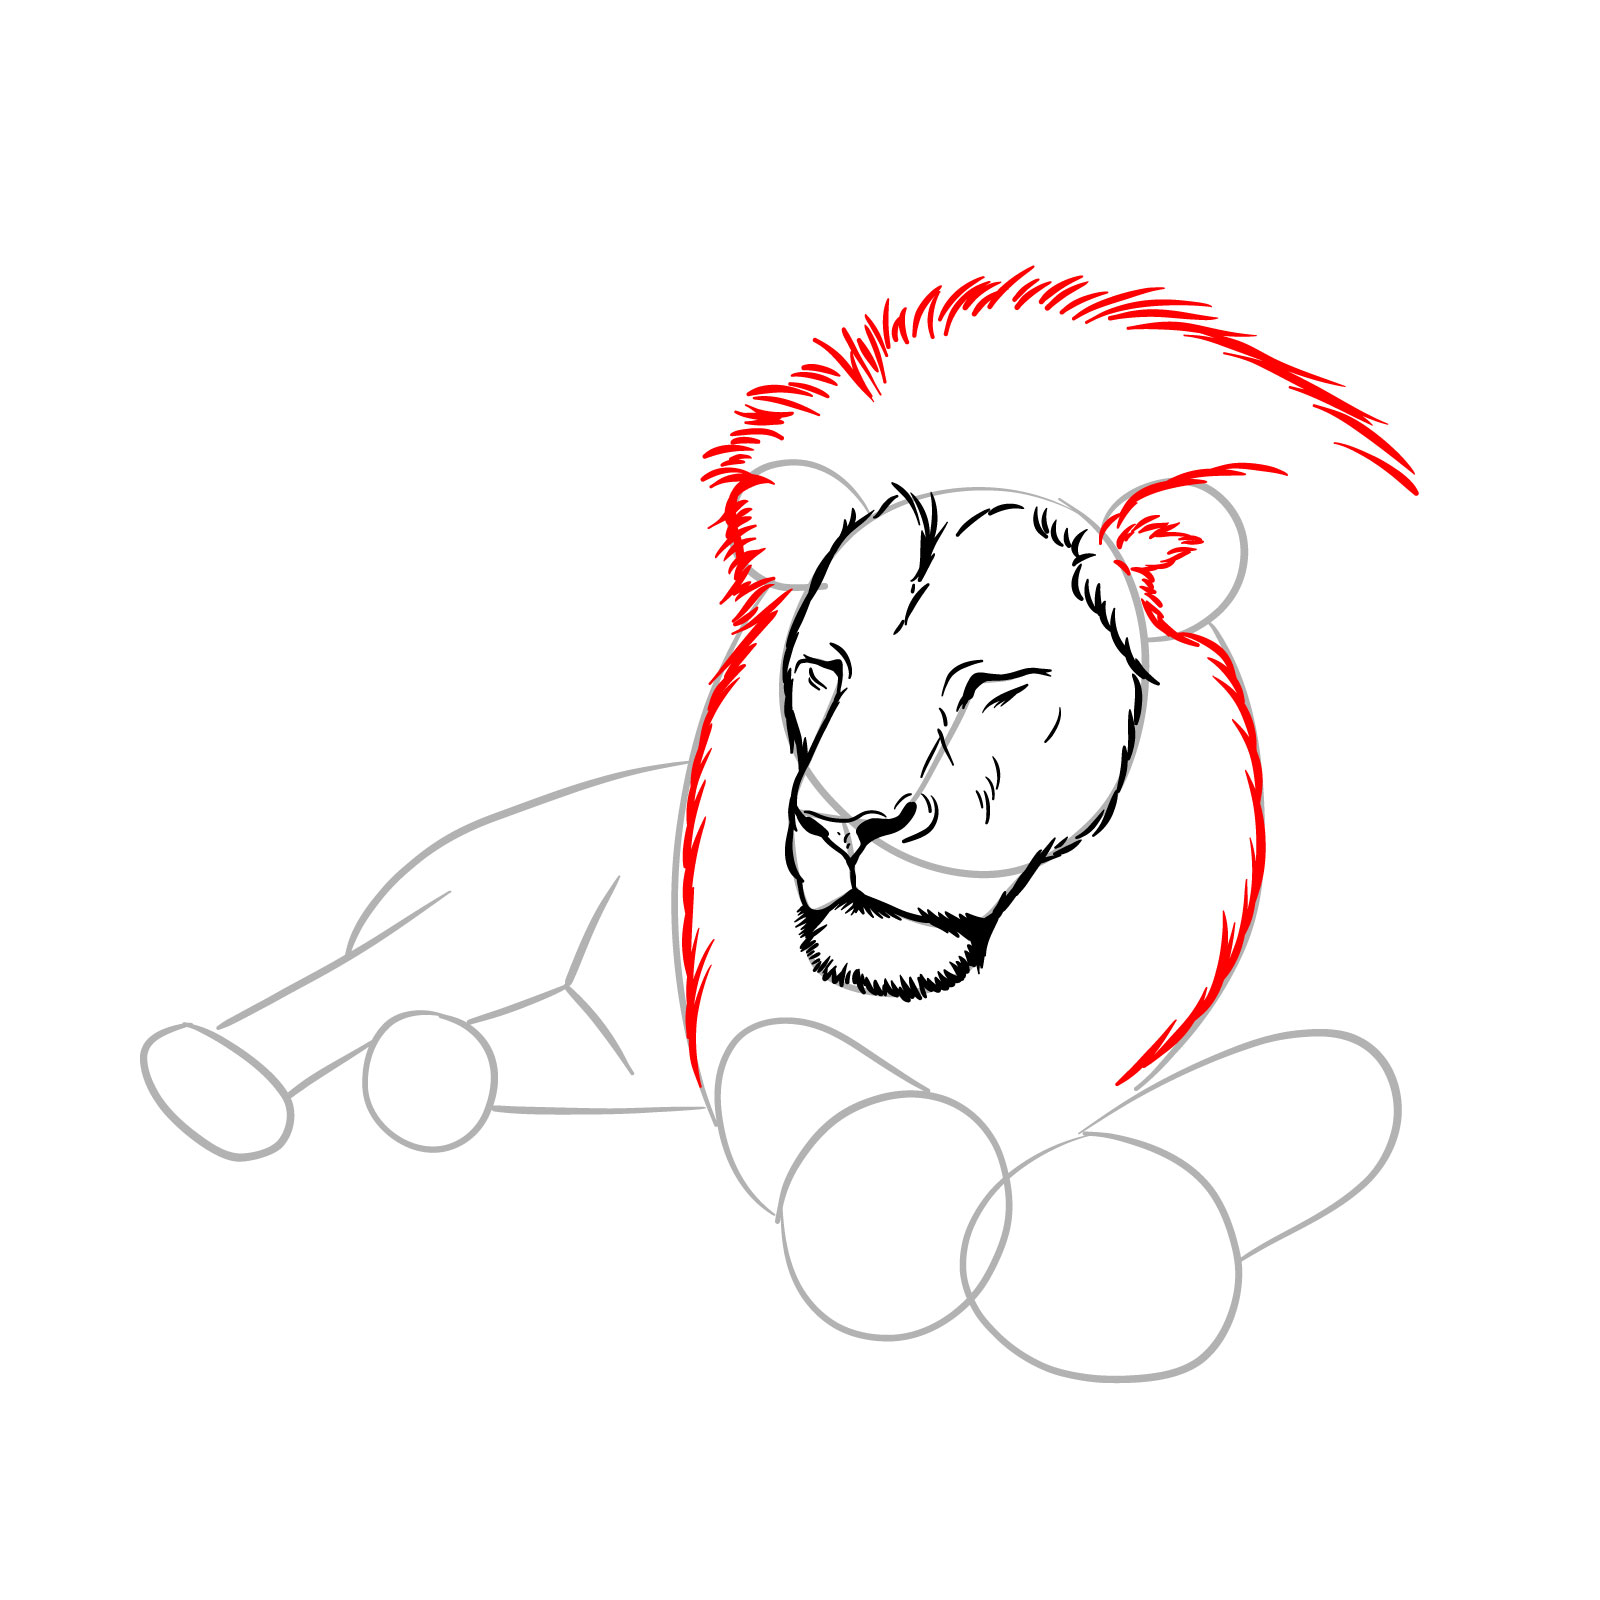 Sleeping lion drawing - Step 6: Sketching ear fur and mane